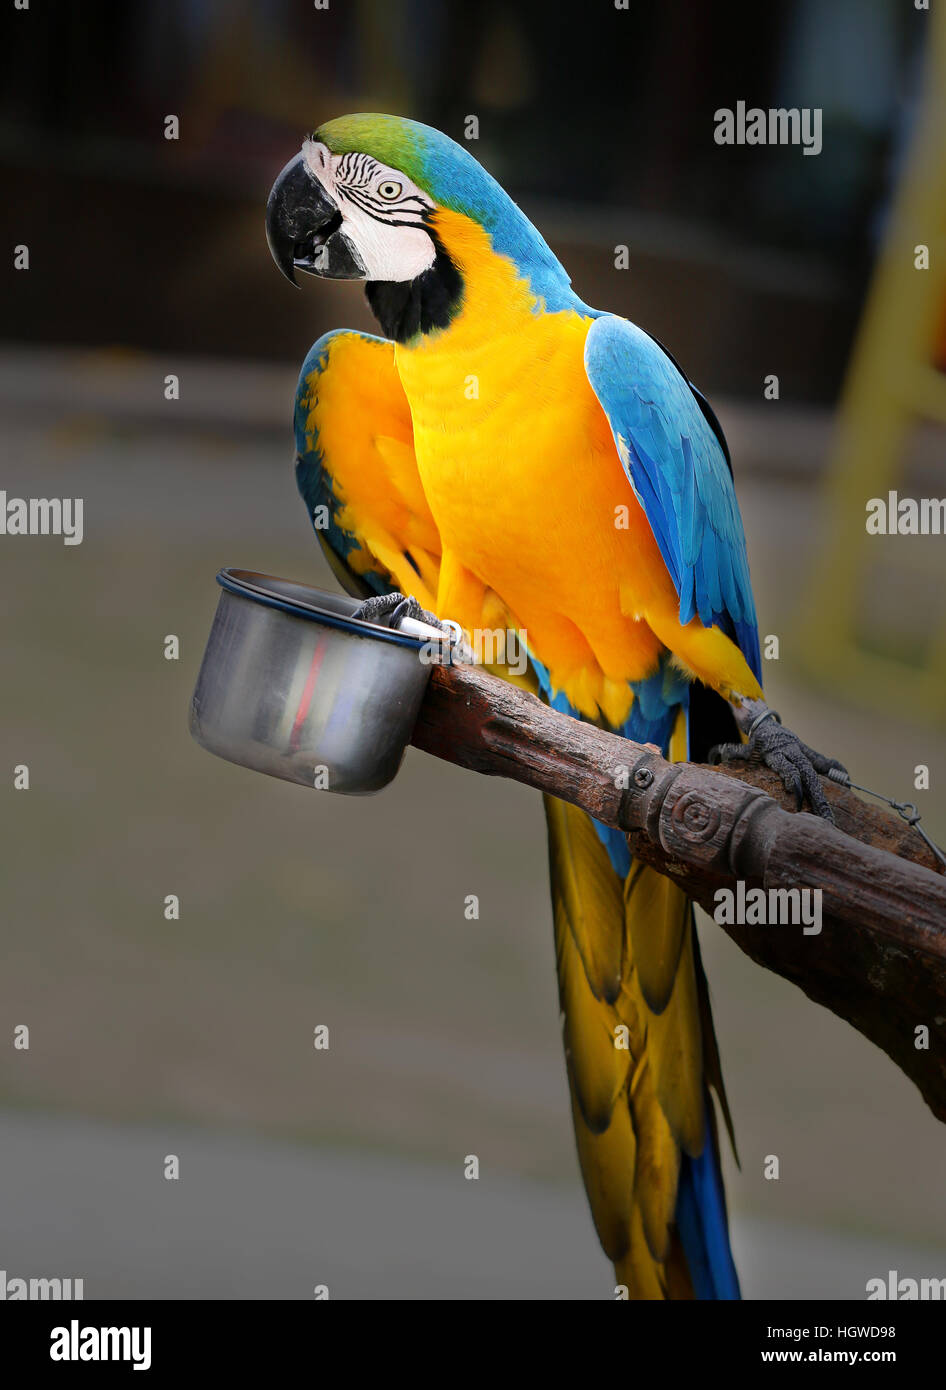 Fun photo with big beautiful macaw parrot Stock Photo